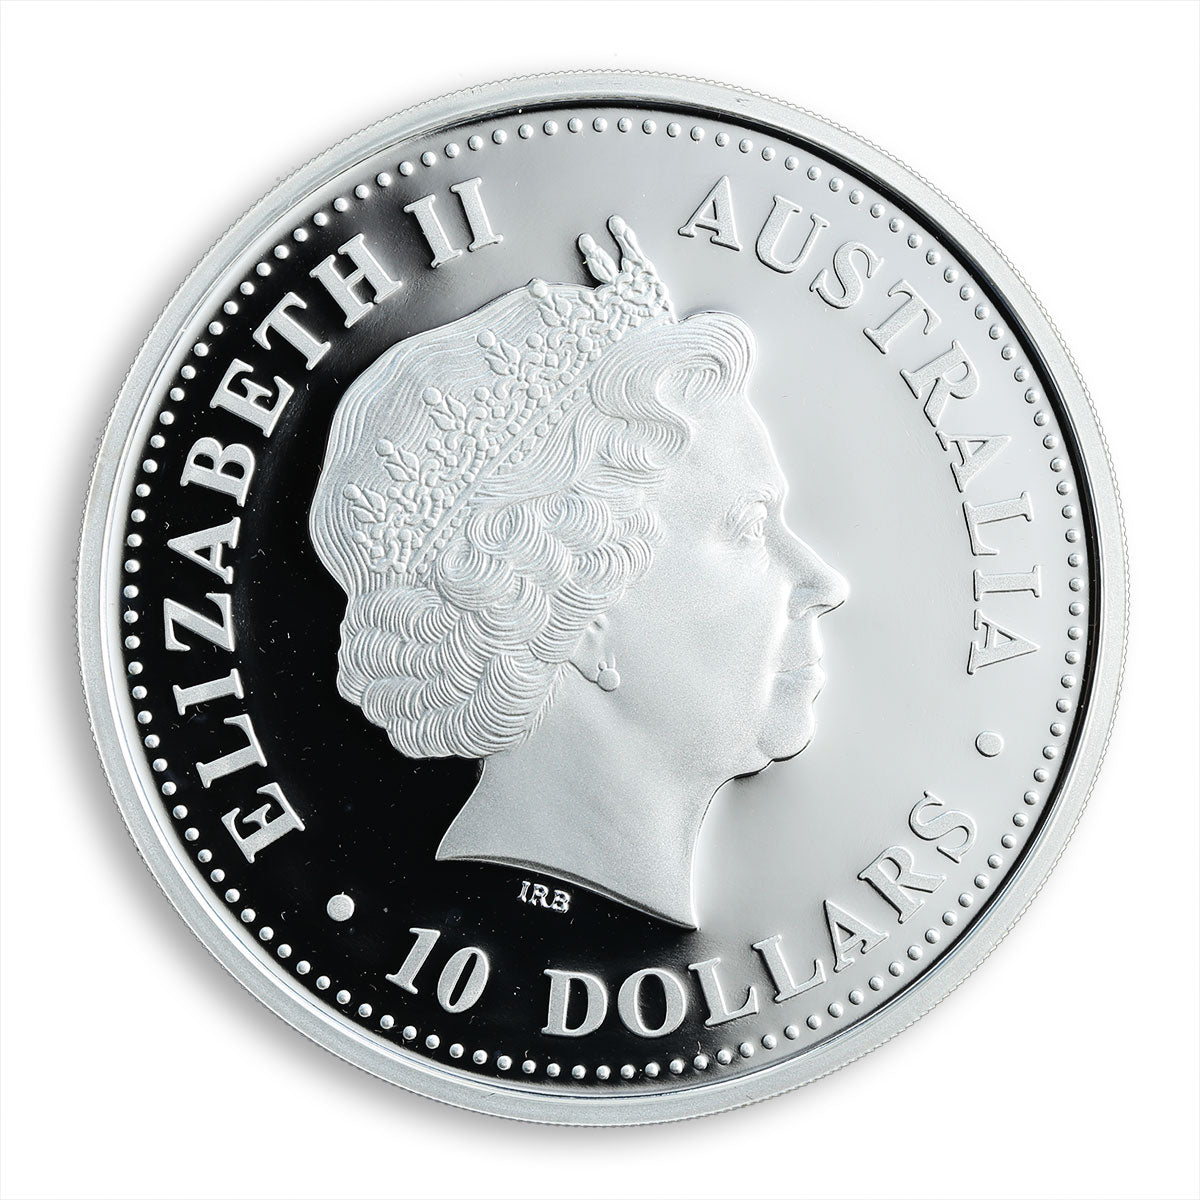 10 oz Silver Coin - 2001 Australian Kookaburra - Evolution of The Calendar - .999Ag